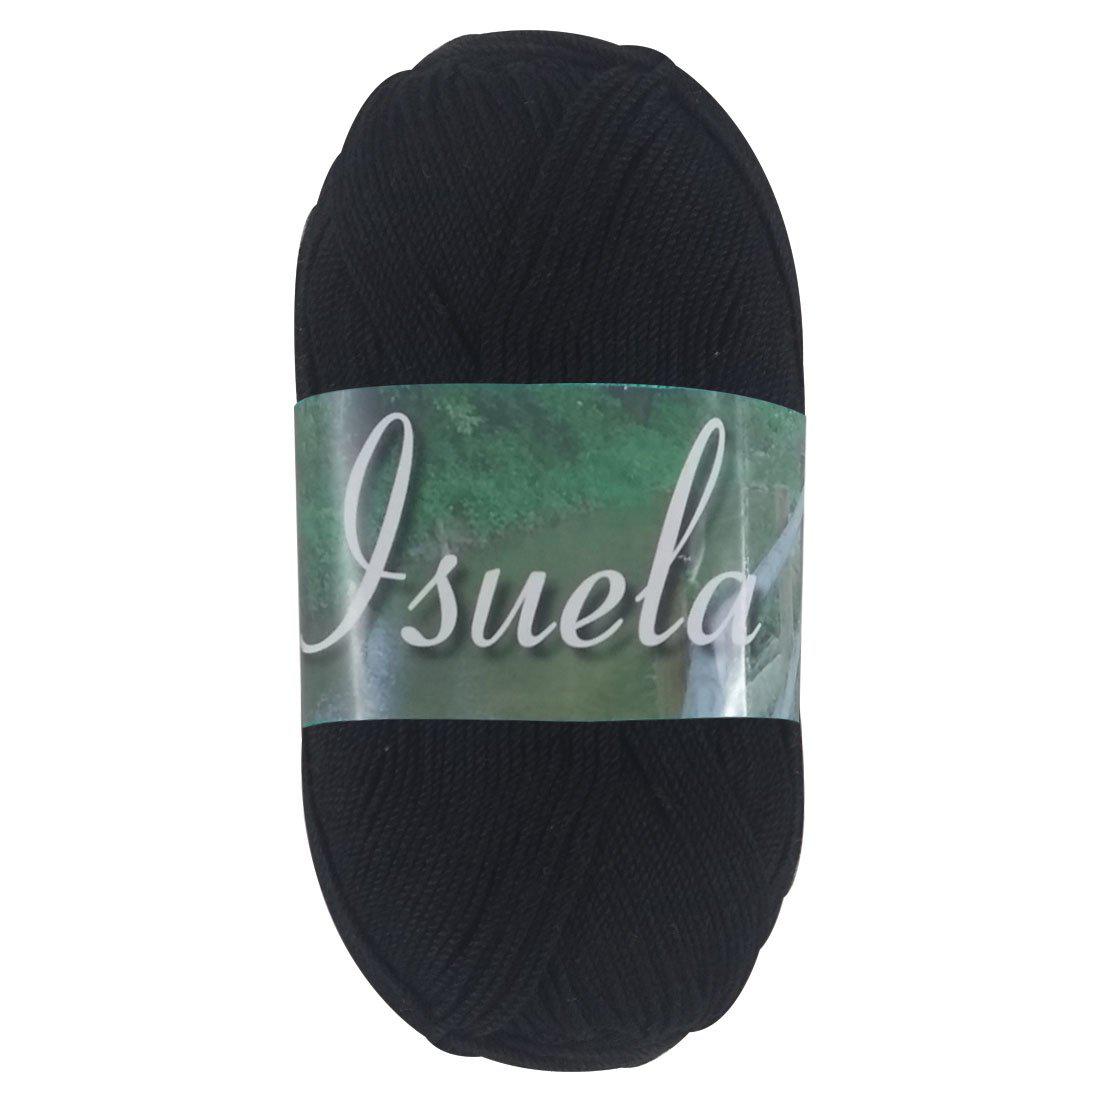 Hilaza Isuela, marca Omega, BOLSA con 5 madejas de 100g con 270m